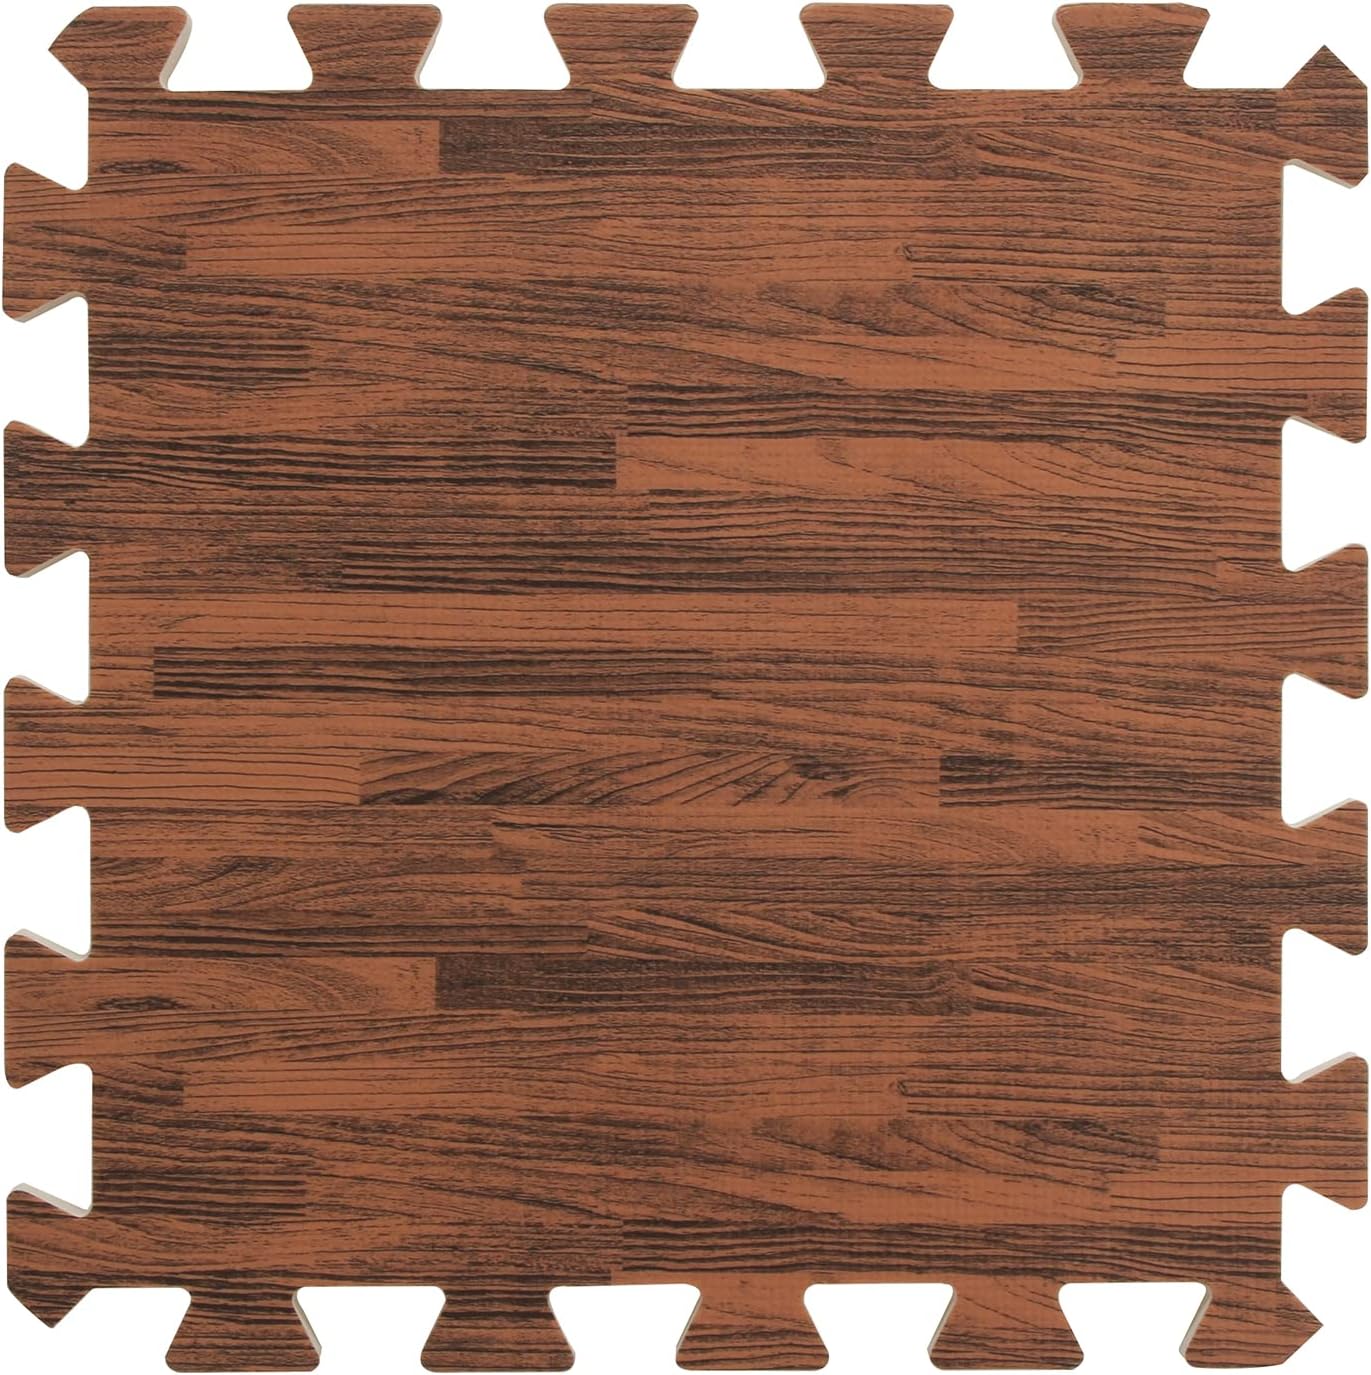 16pcs Interlocking Printed Wood Grain Eva Foam Mats Protective Floor Tiles Exercise Play Mat For Kids Room Parlor Bedroom Home 11.8" x 11.8" Wood Grain Brown By PAIDU